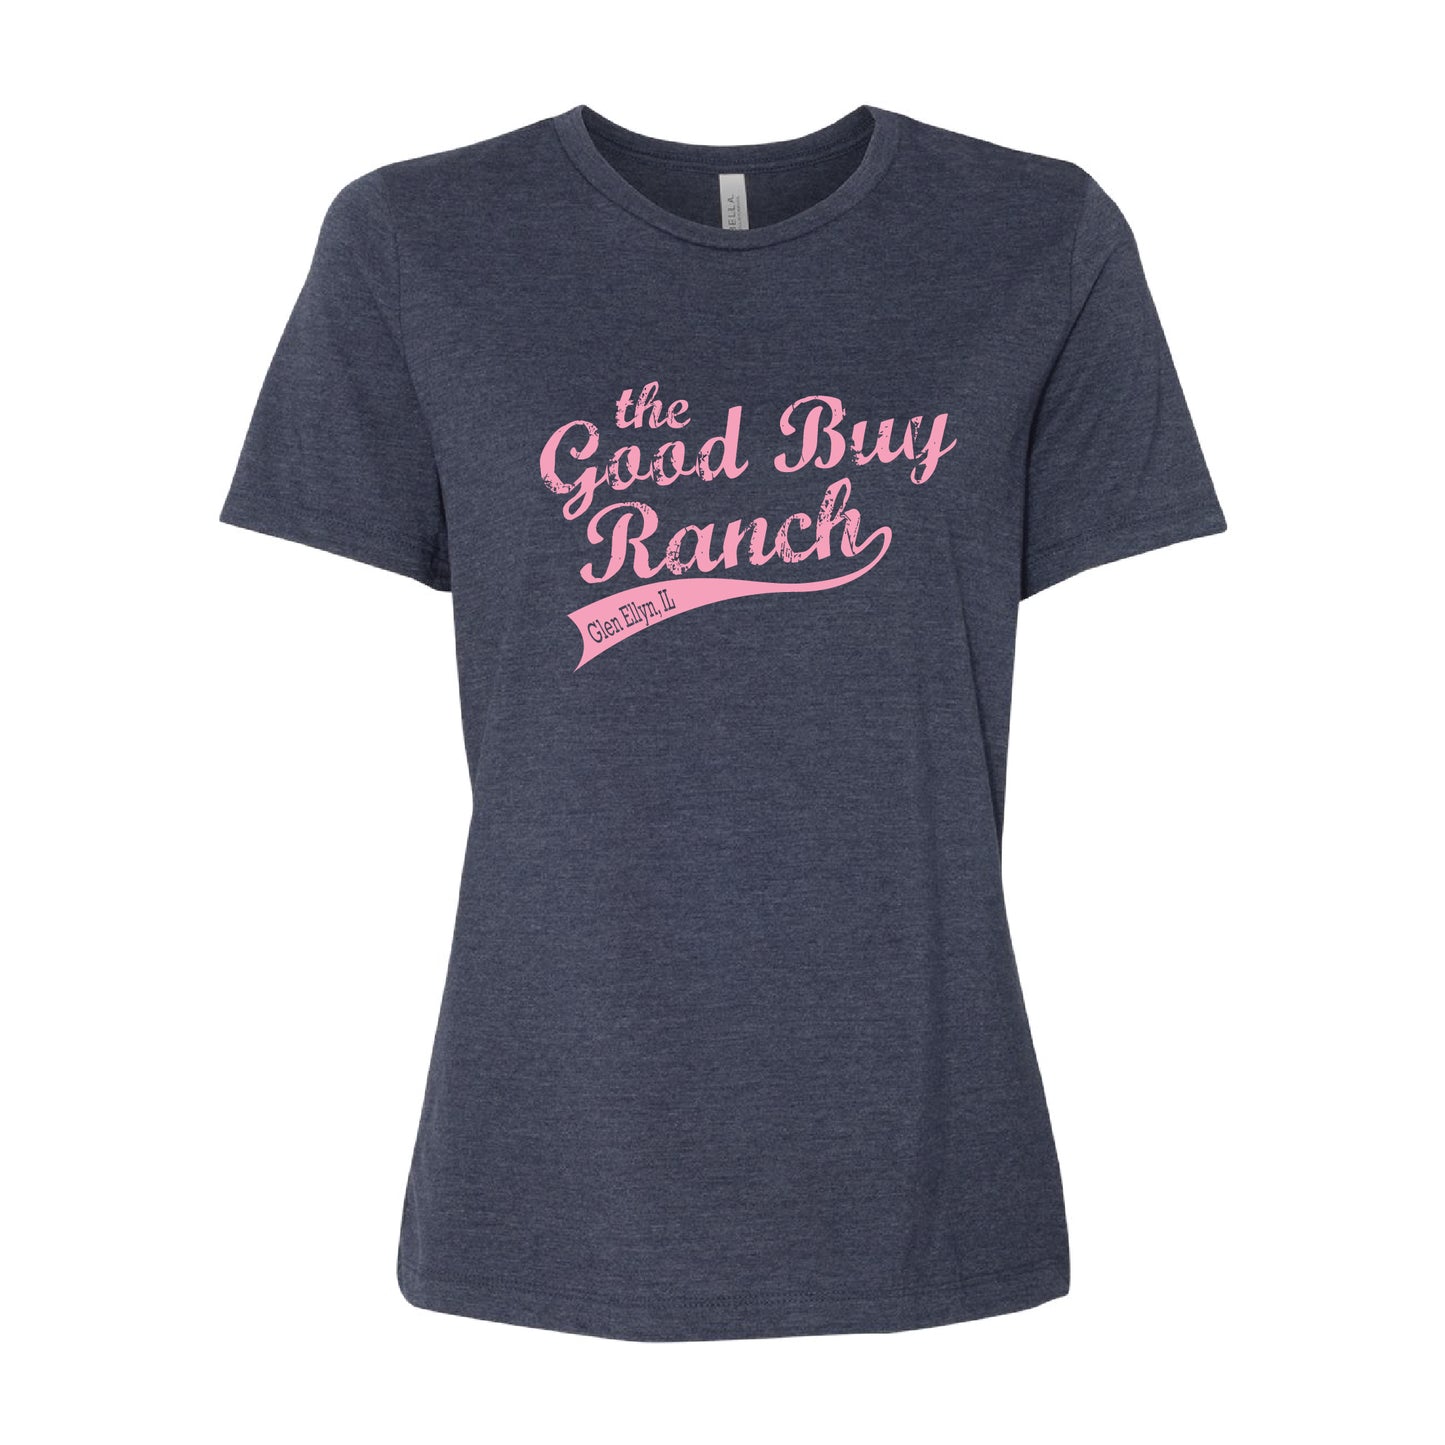 Good Buy Ranch Ladies T-Shirt